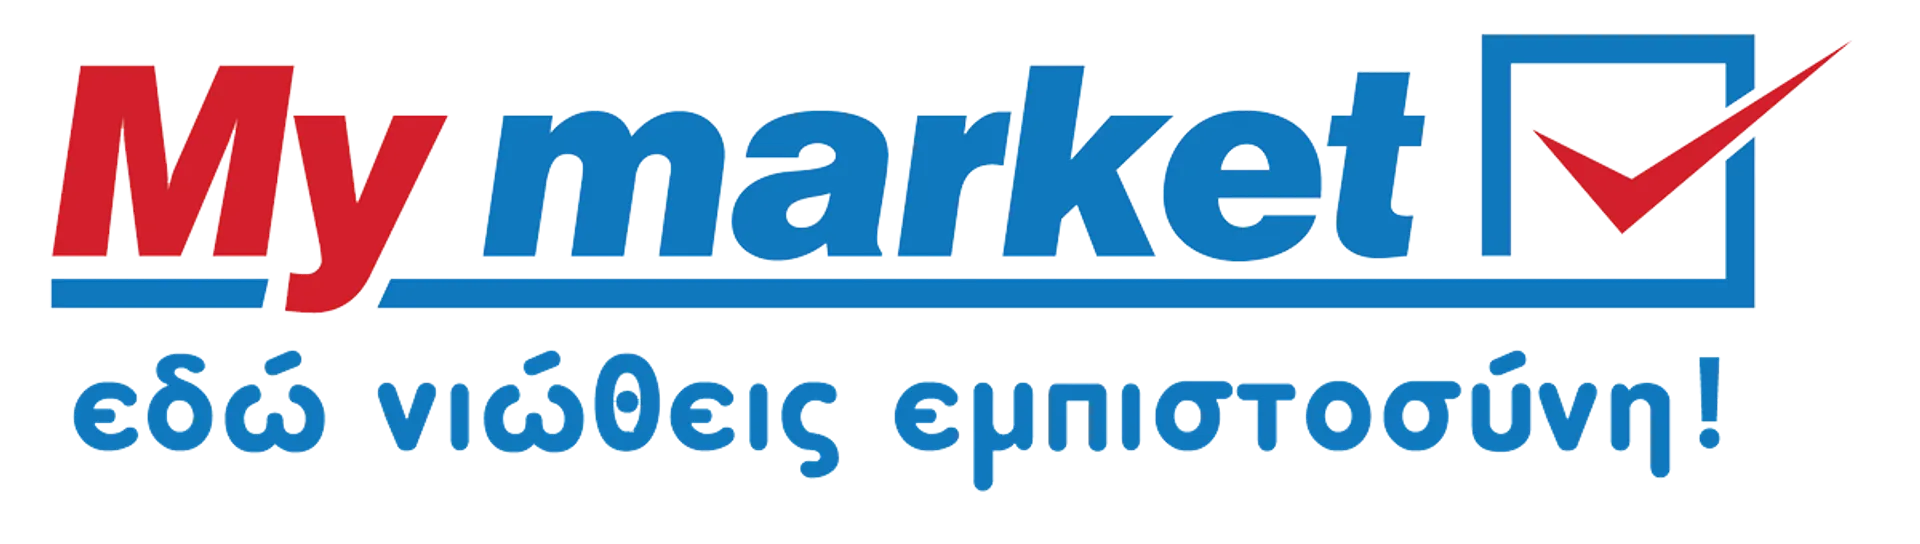 MY MARKET logo